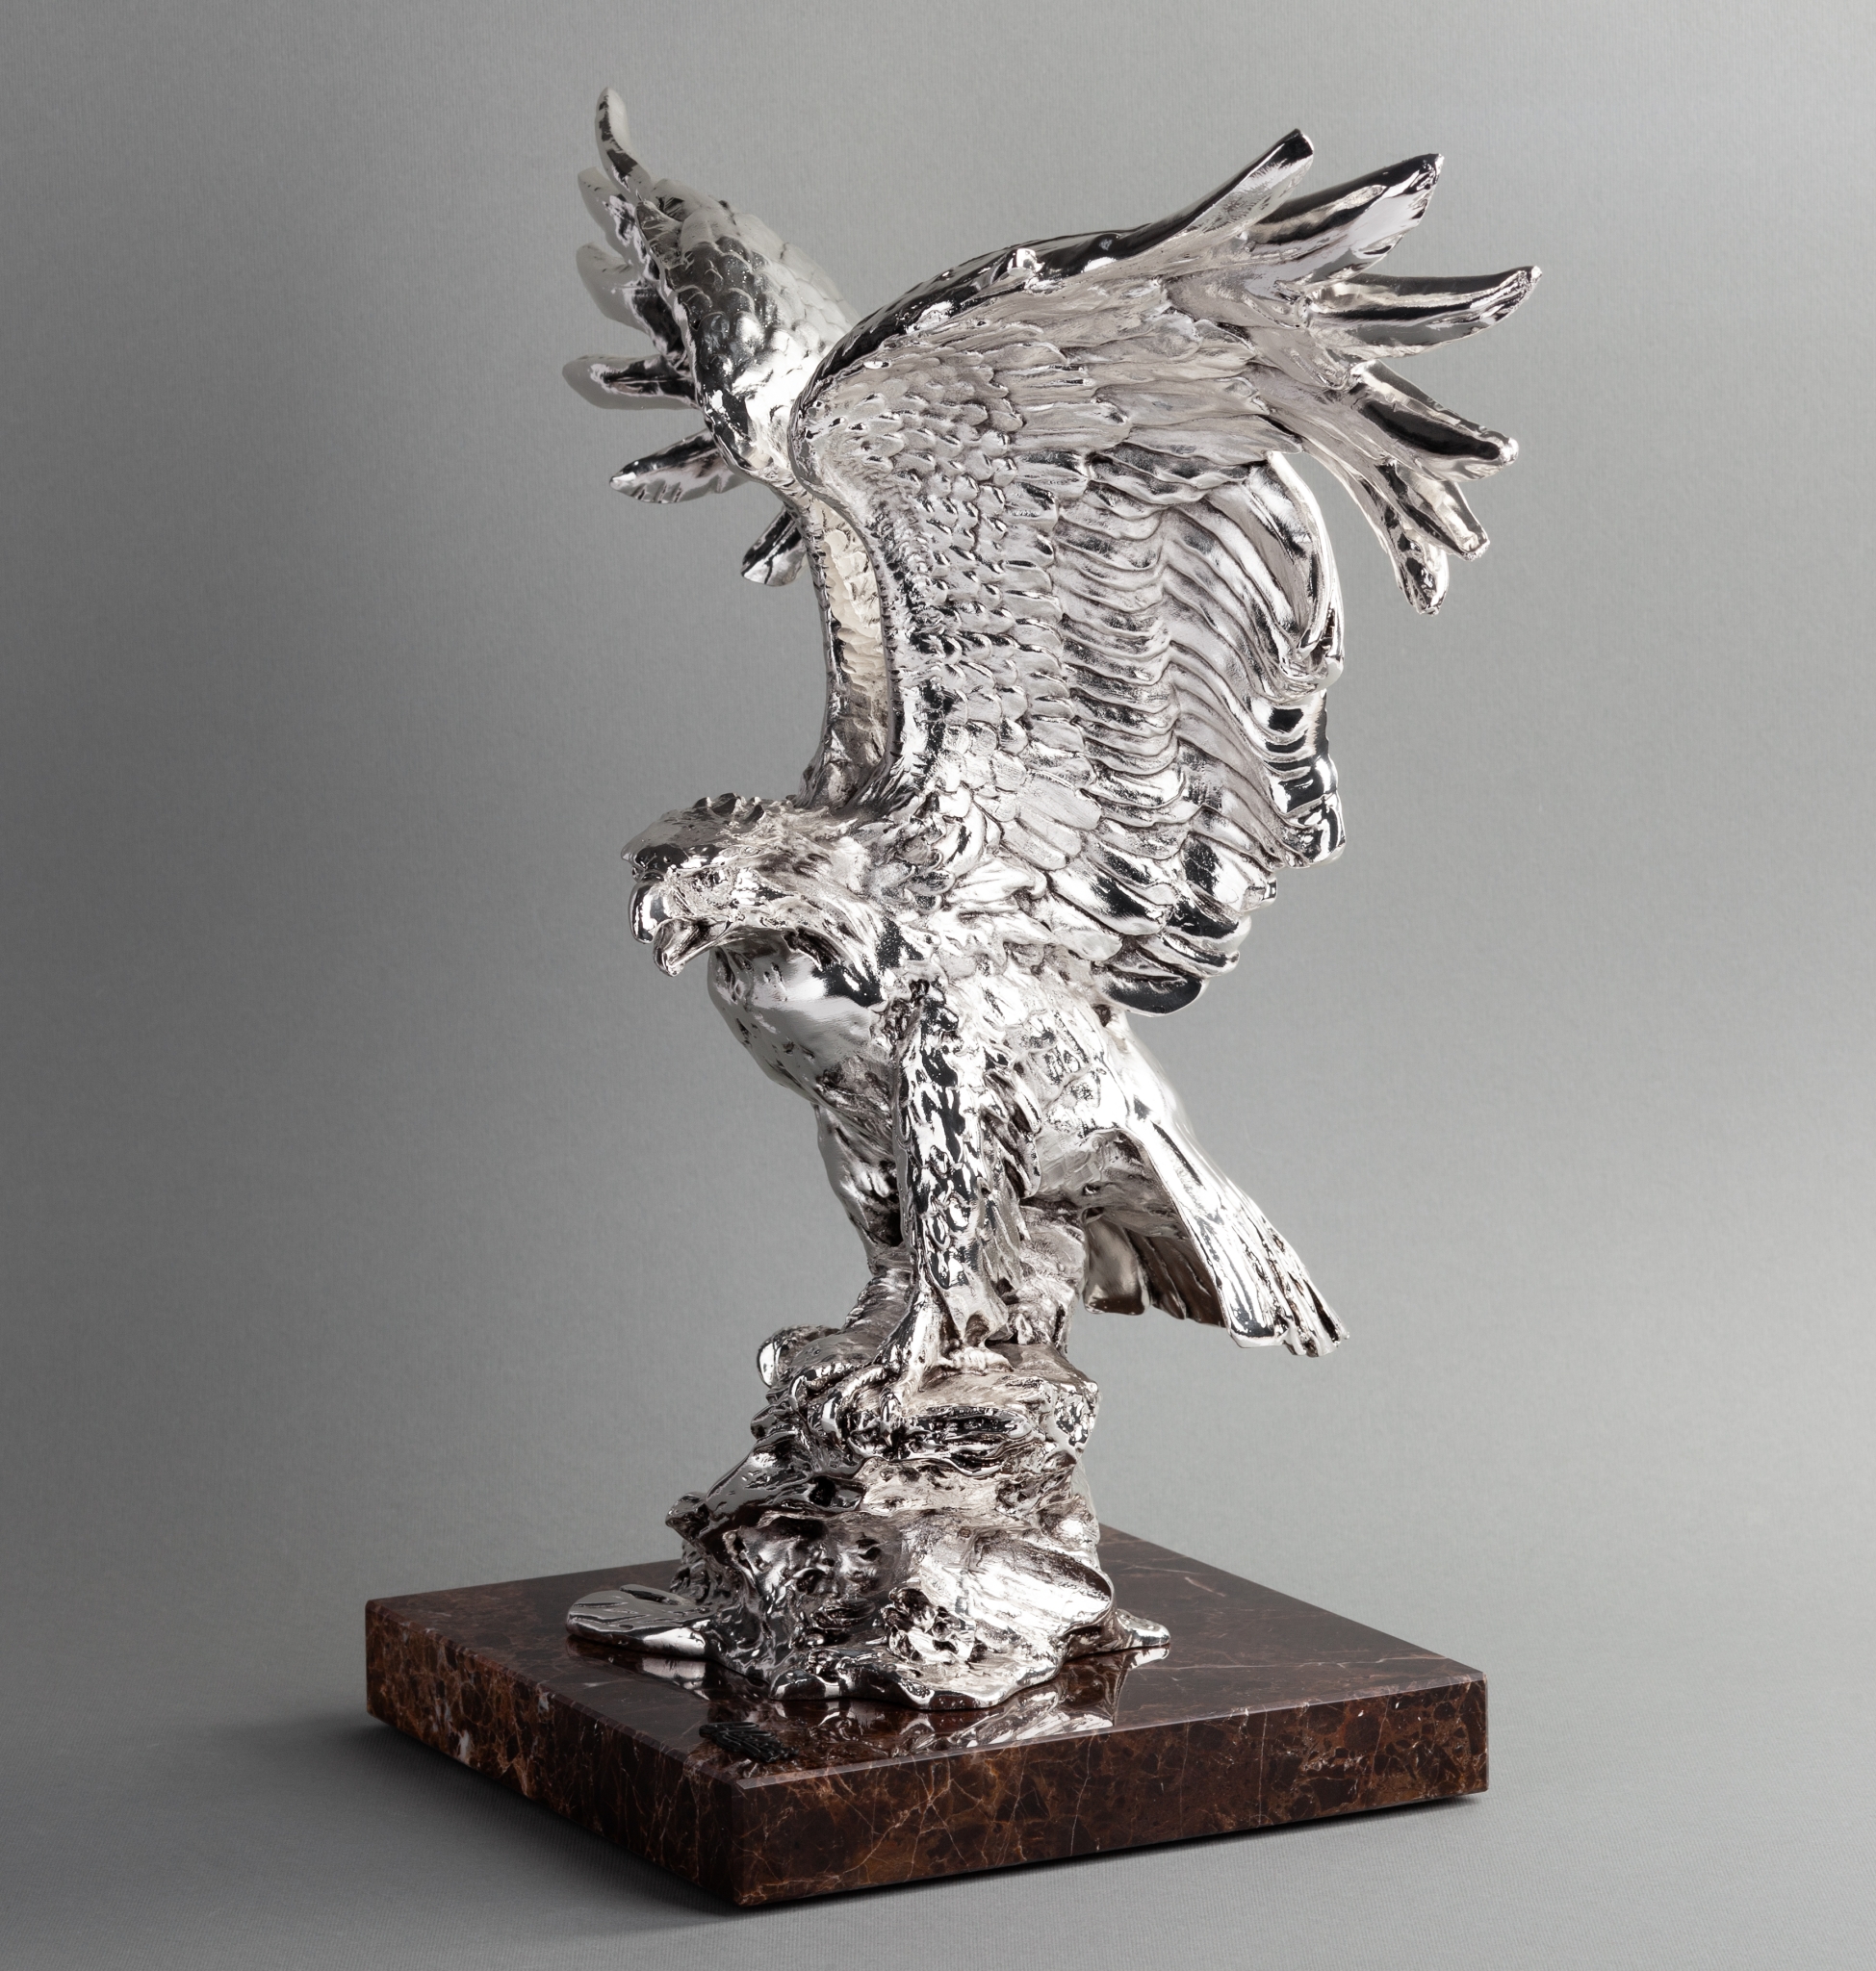 Скульптура "Орел", серебристый, камень